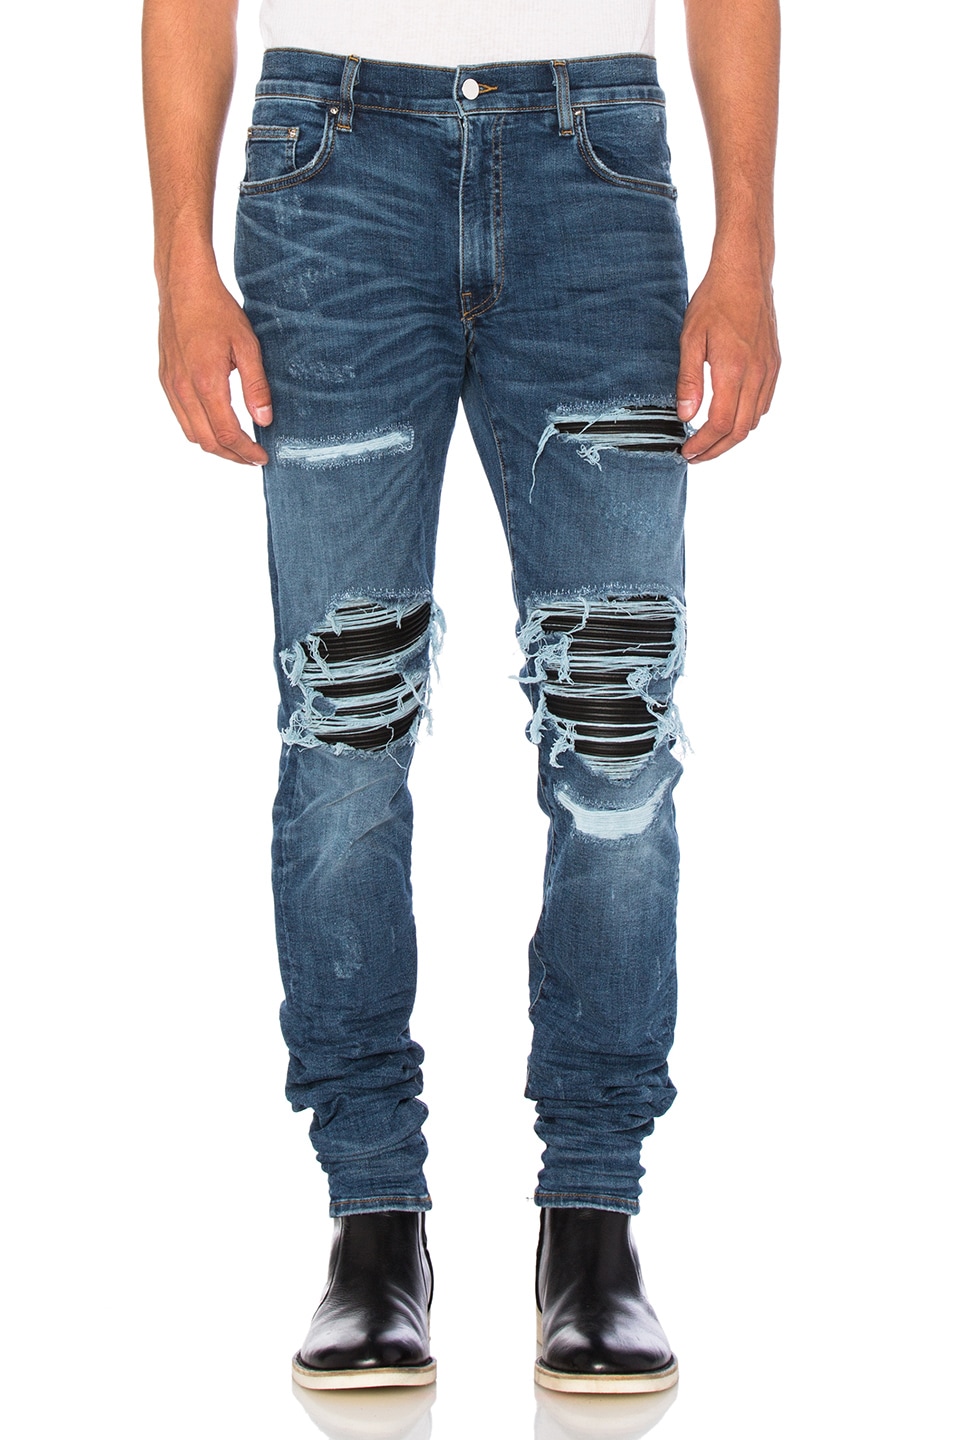 [W2C] pirits 1:1 Amiri jeans? : r/FashionReps